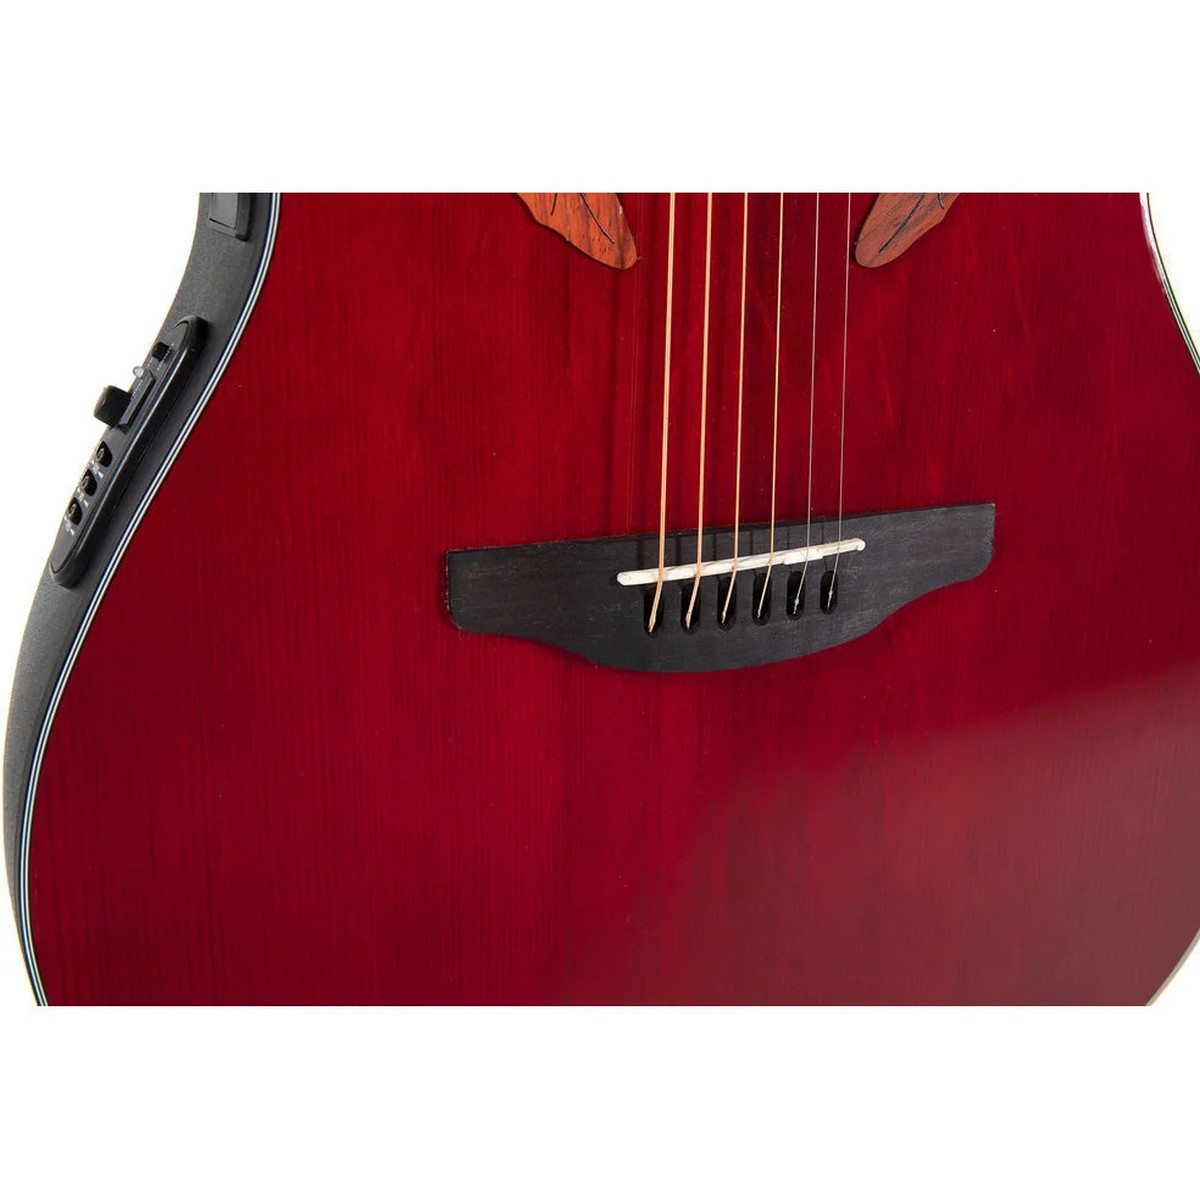 Электроакустическая гитара OVATION CE44-RR Celebrity Elite Mid Cutaway Ruby Red